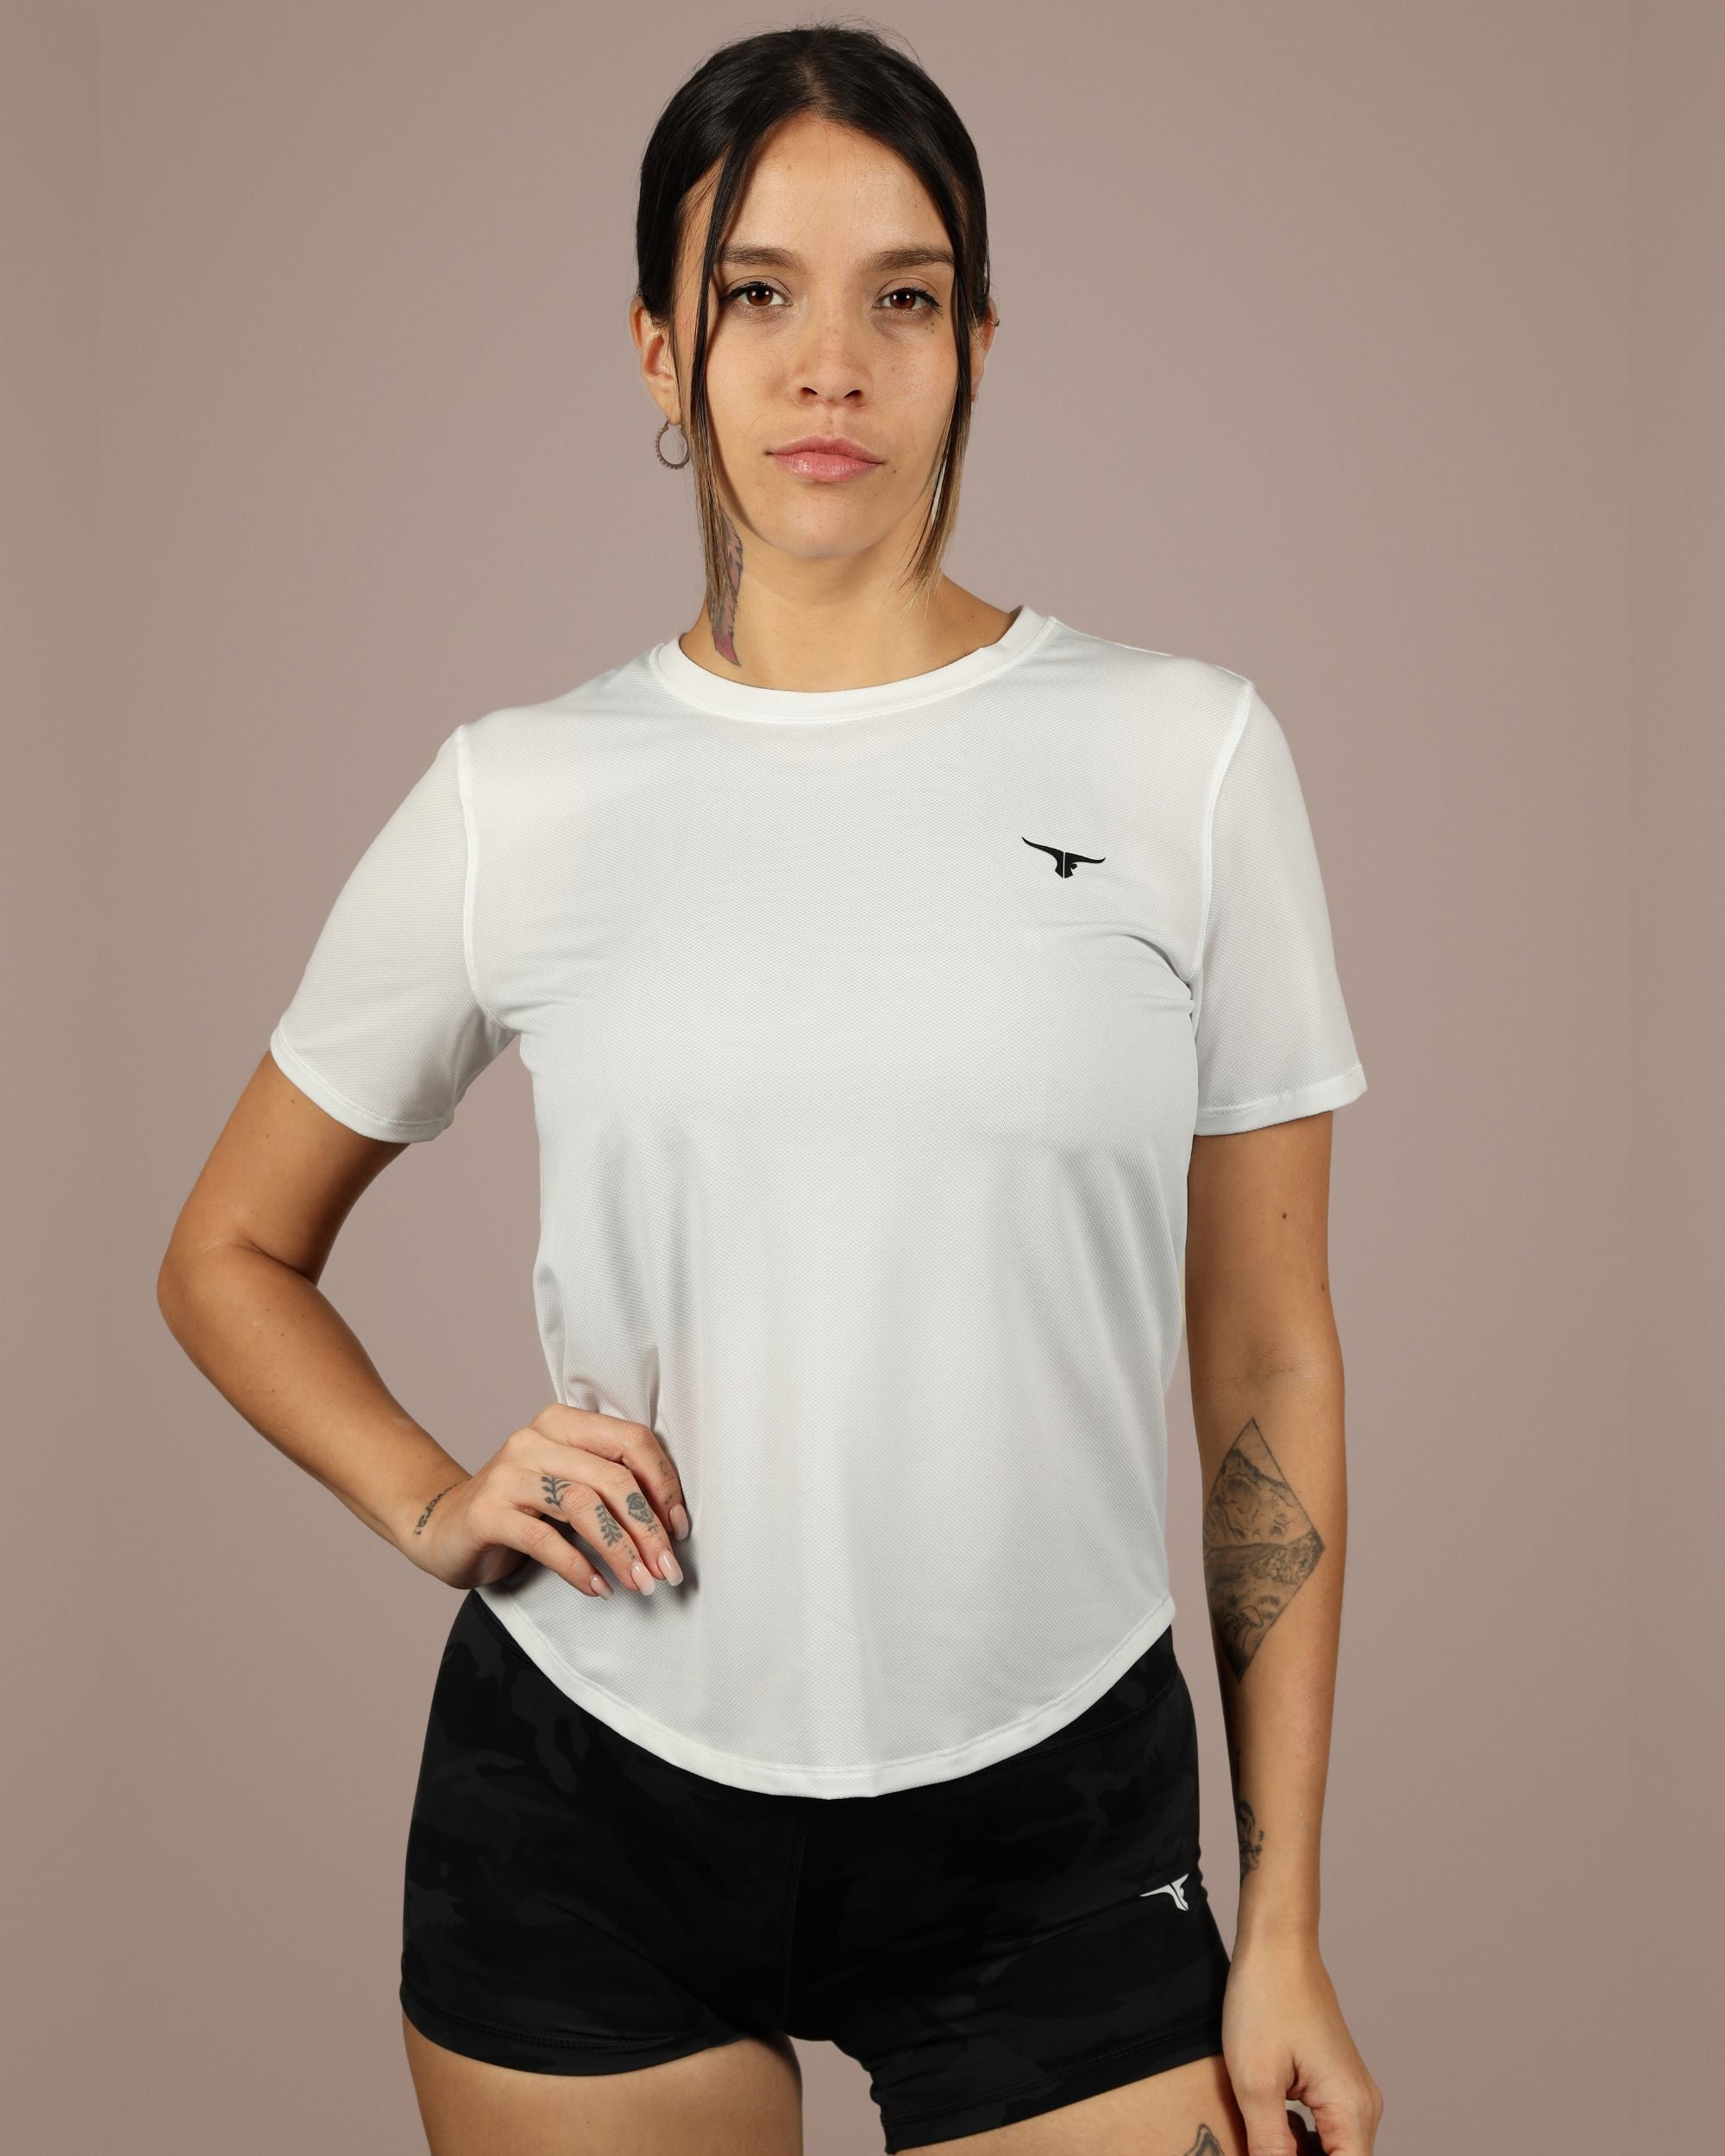 sports t shirt for women